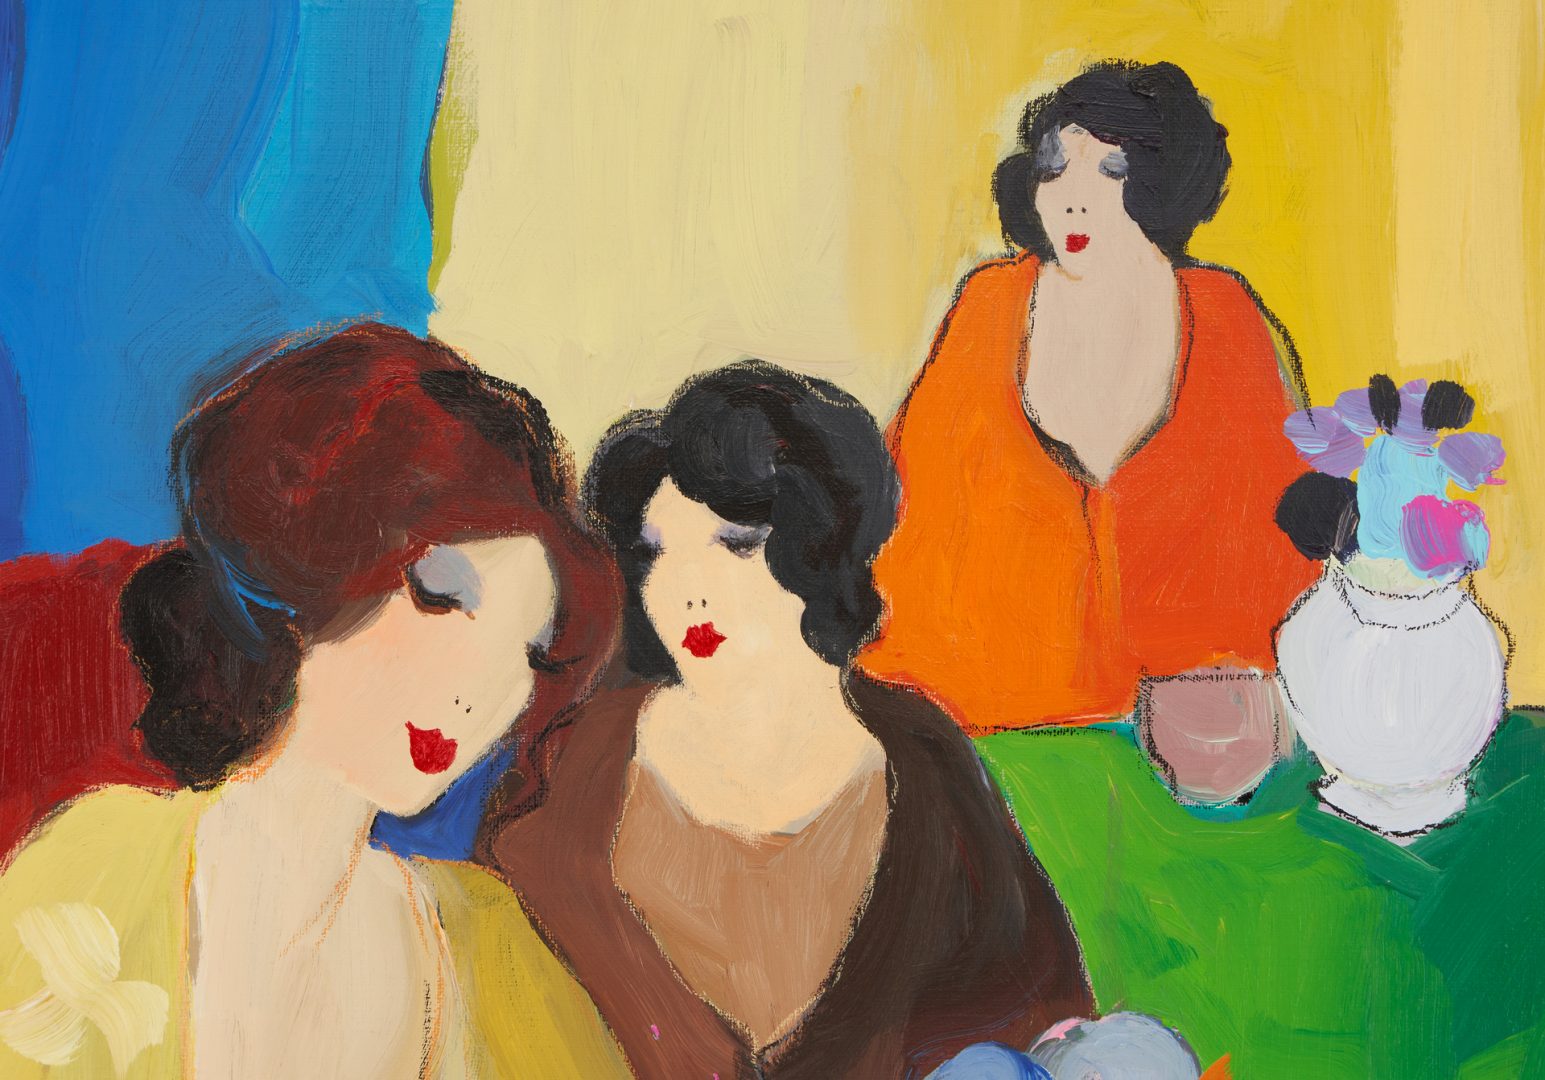 Lot 173: Itzchak "Isaac" Tarkay O/C Painting of Seated Women in an Interior Scene